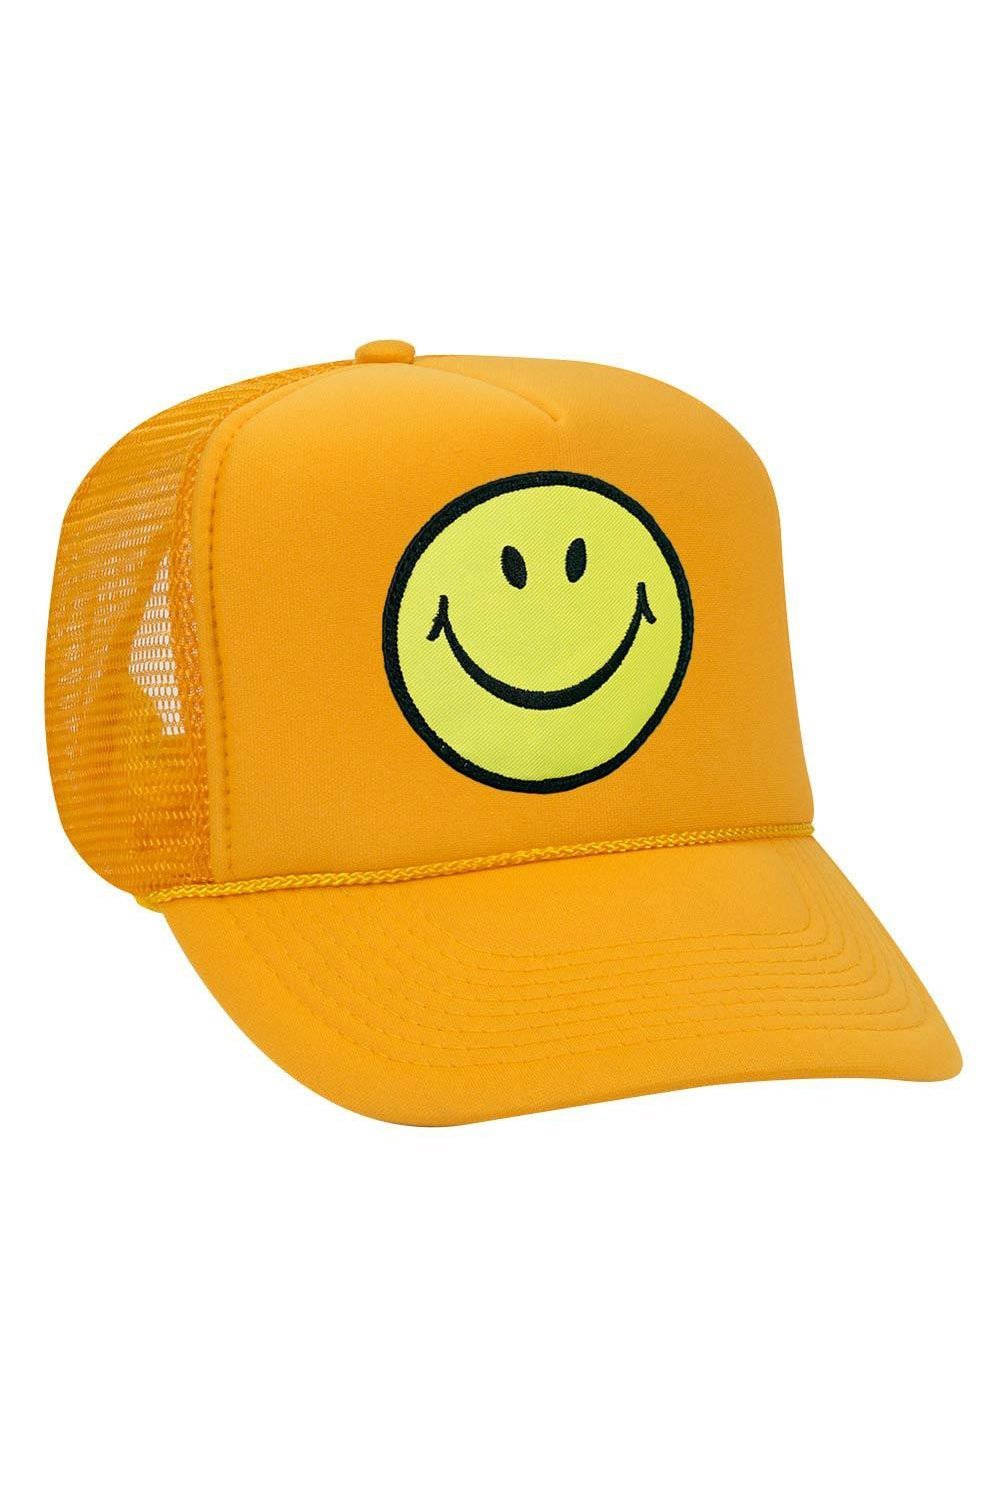 SMILEY VINTAGE TRUCKER HAT HATS Aviator Nation OS GOLD 